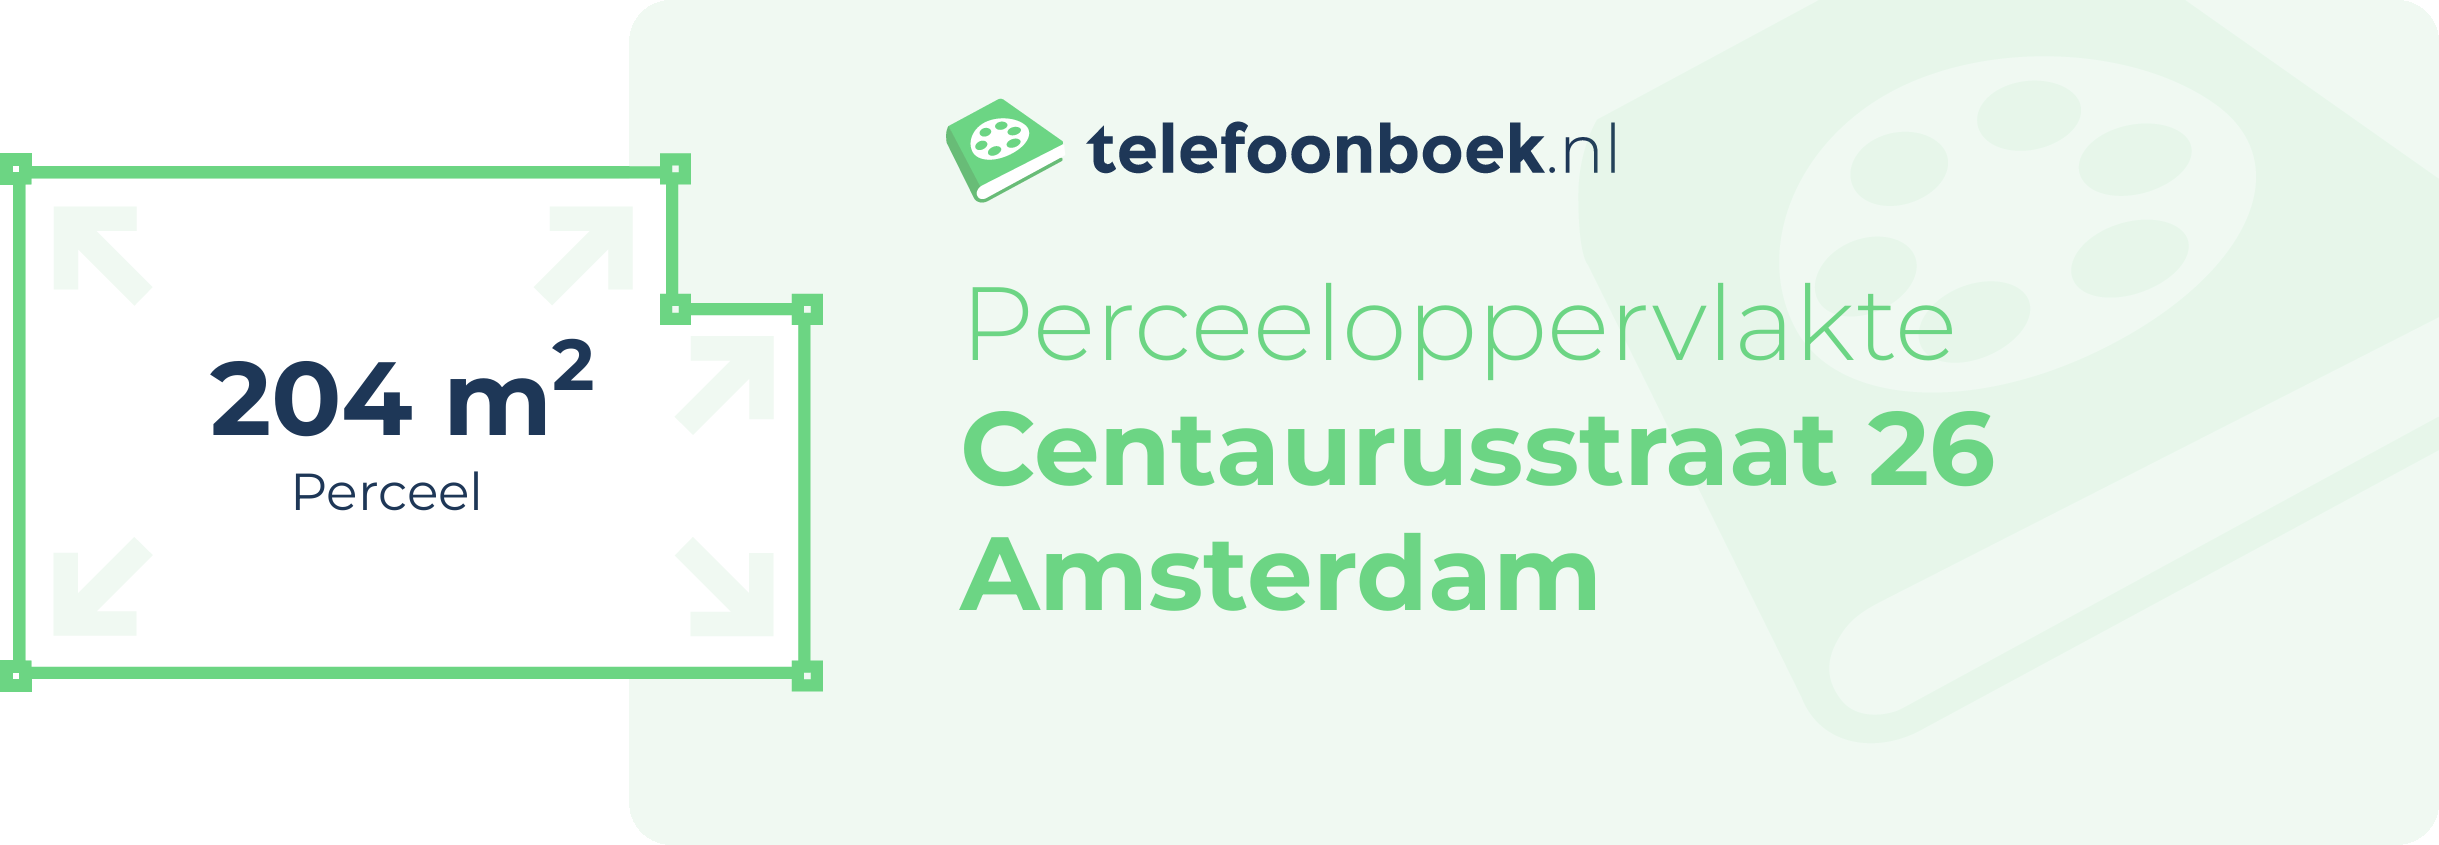 Perceeloppervlakte Centaurusstraat 26 Amsterdam